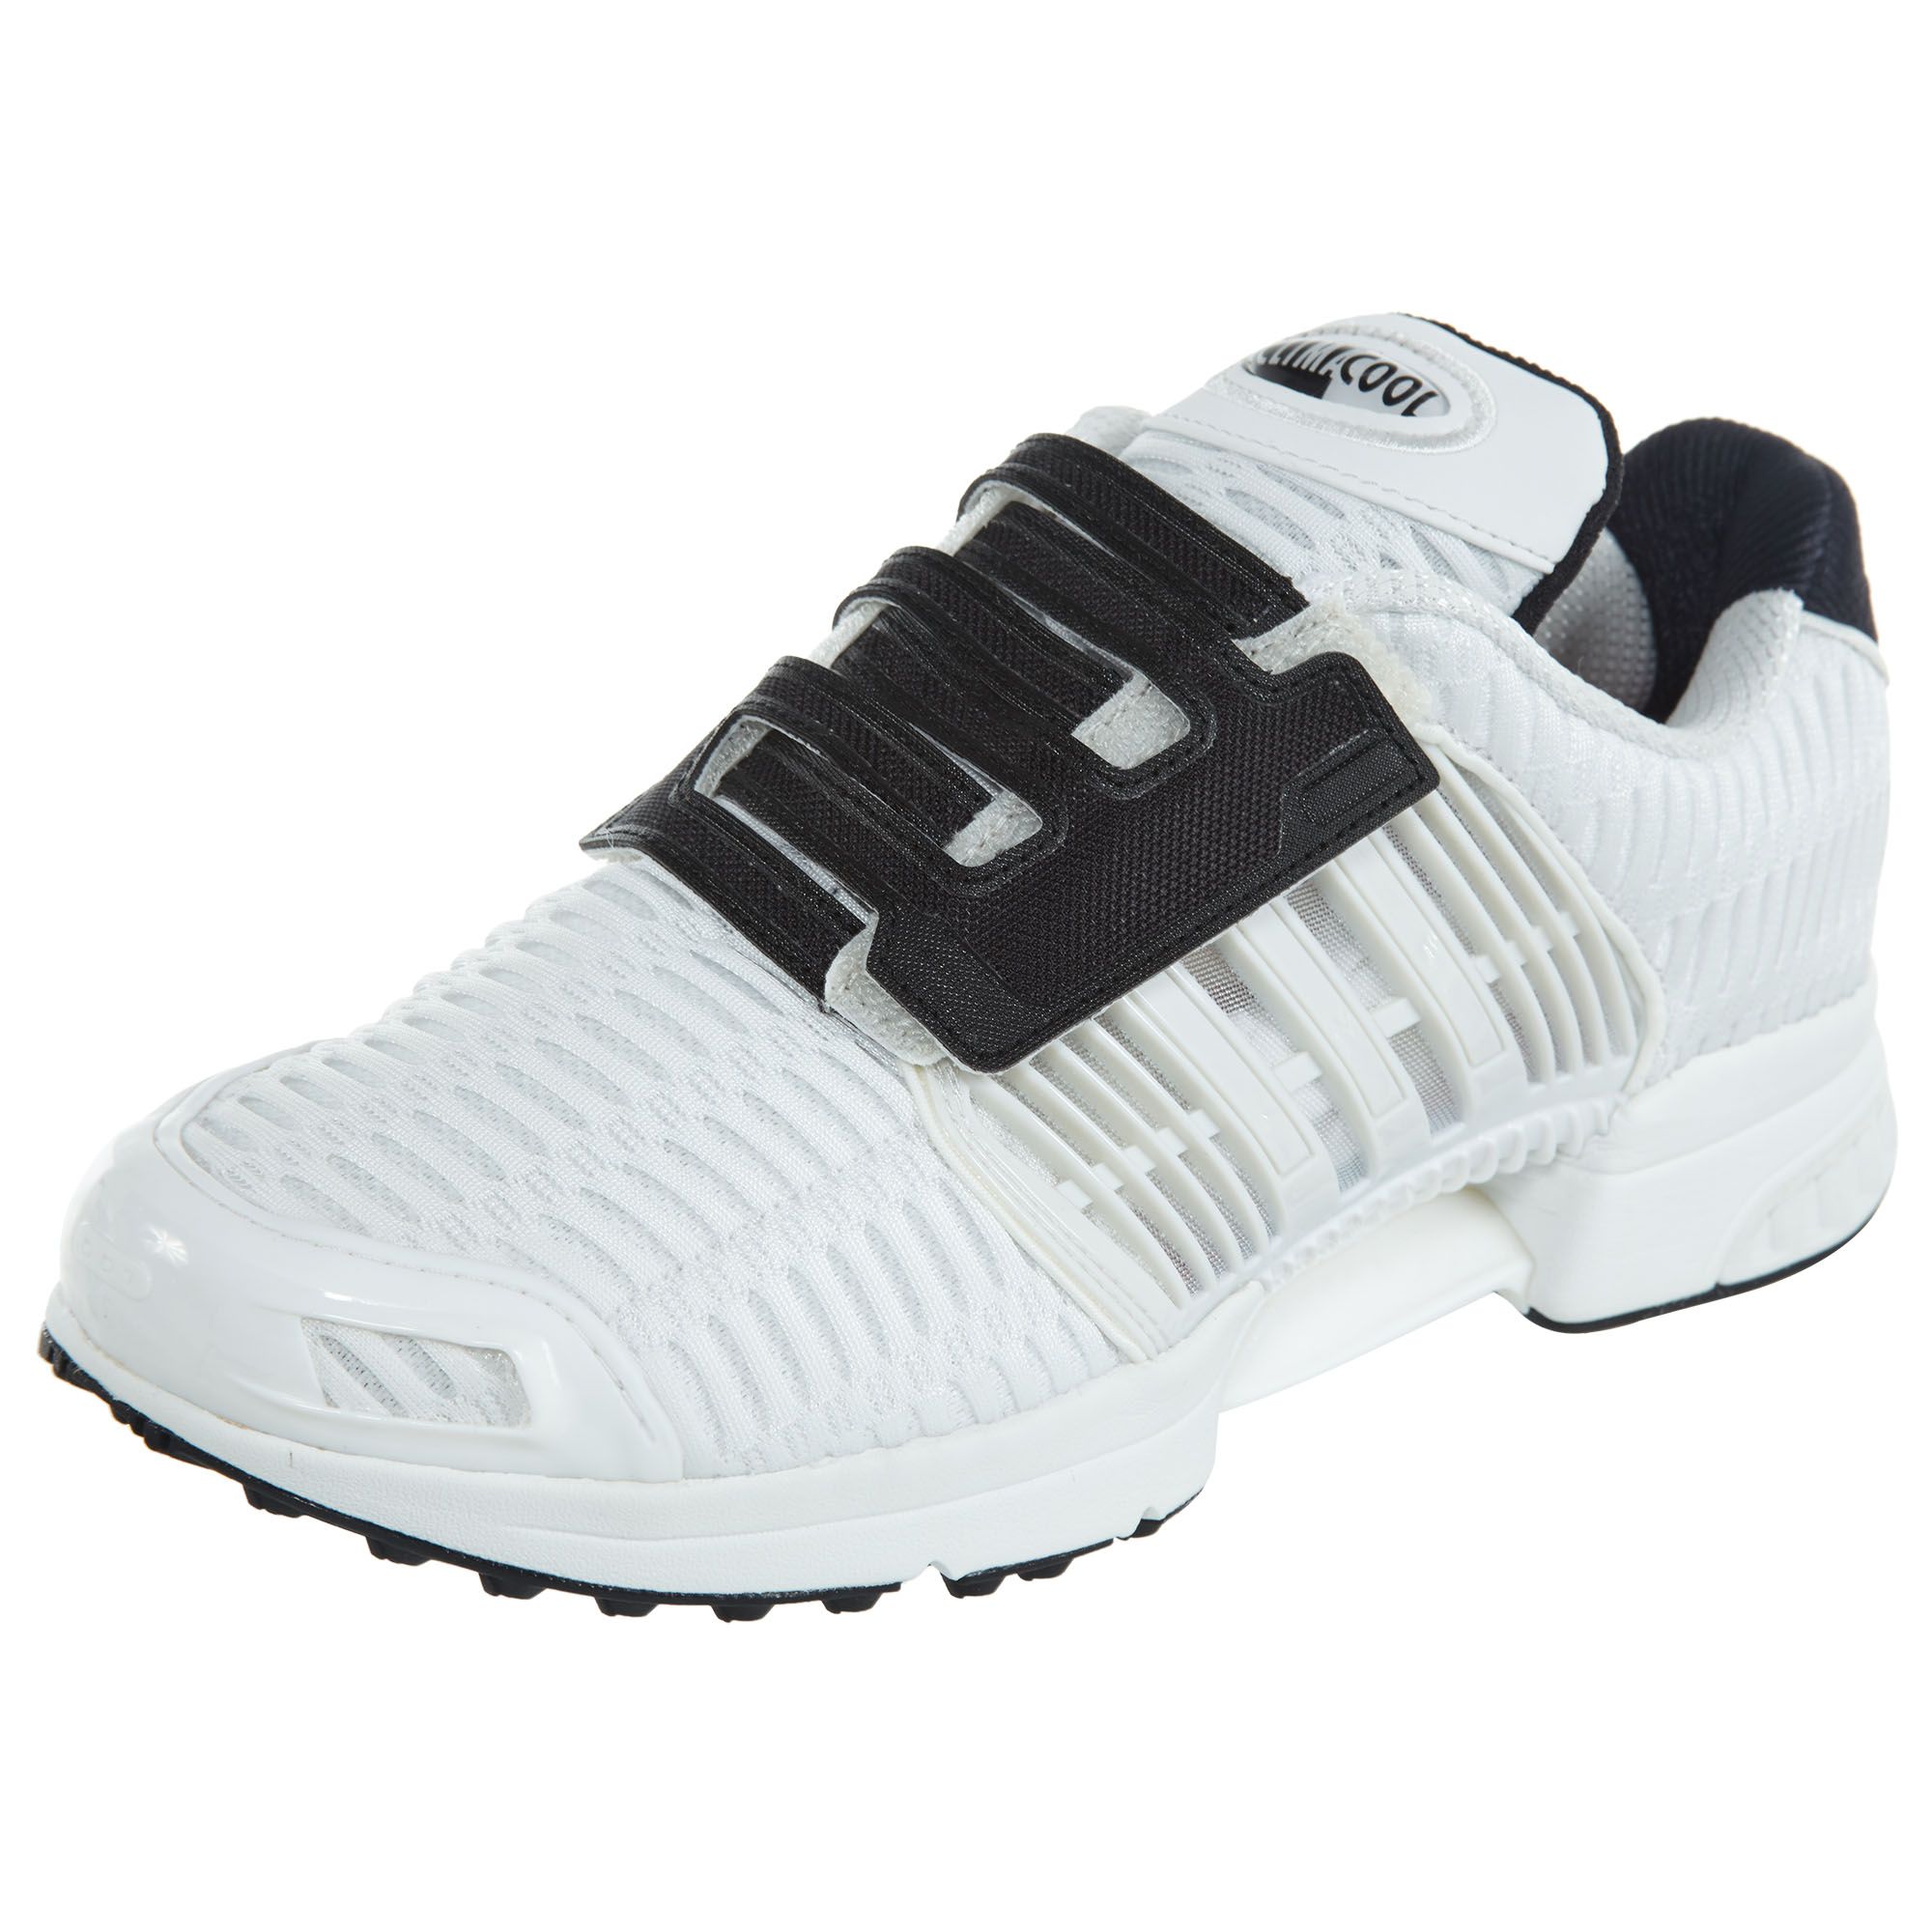 Adidas Climacool 1 Cmf Mens Style : Ba7269-Wht/Wht/Blk